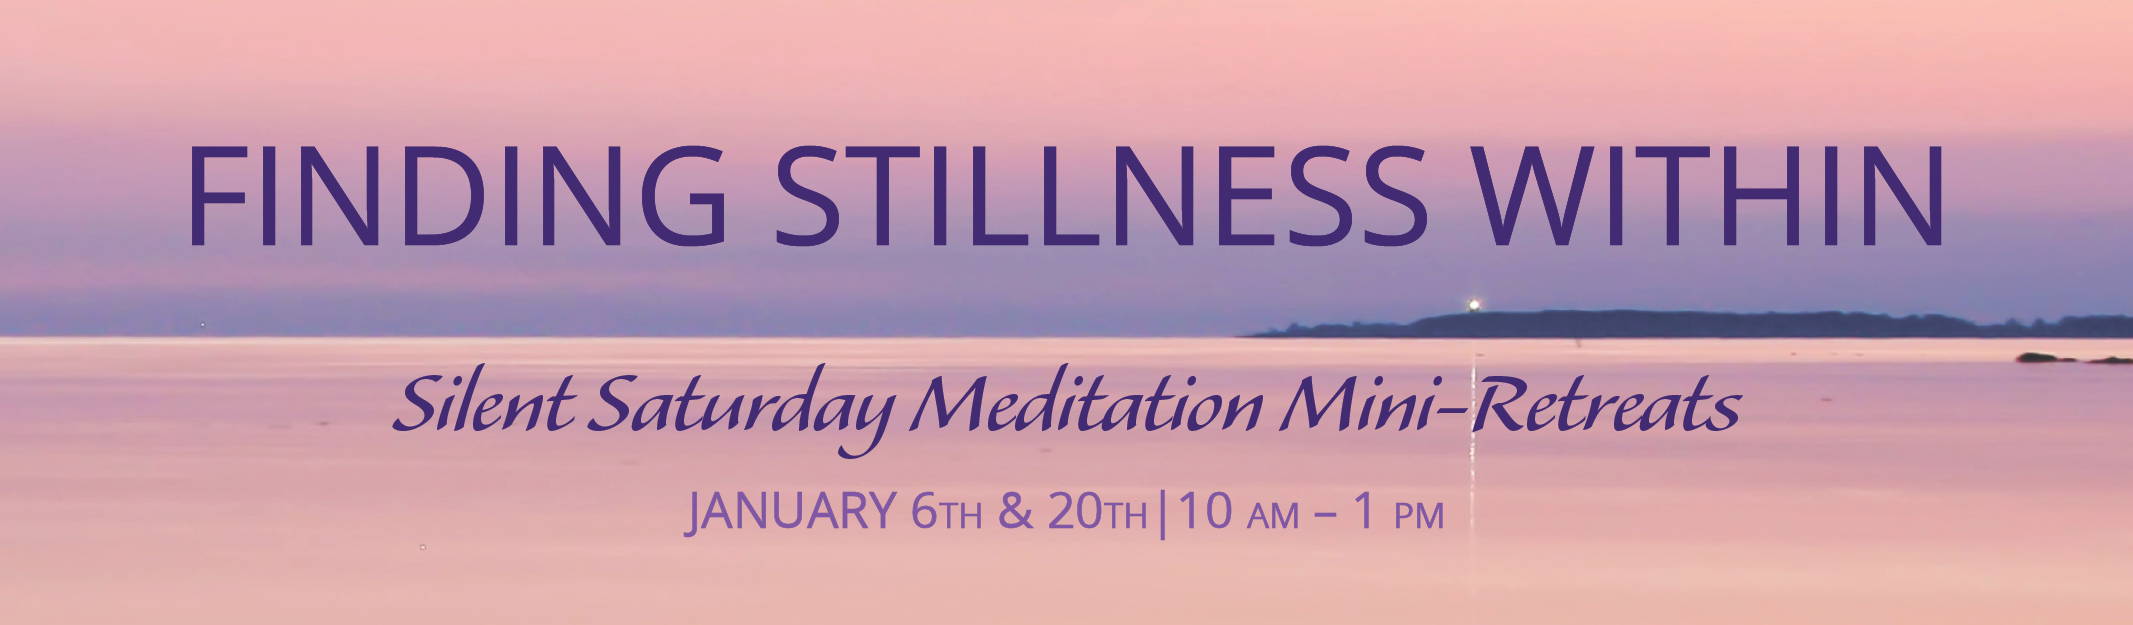 Finding Stillness Within Meditation Mini-Retreats